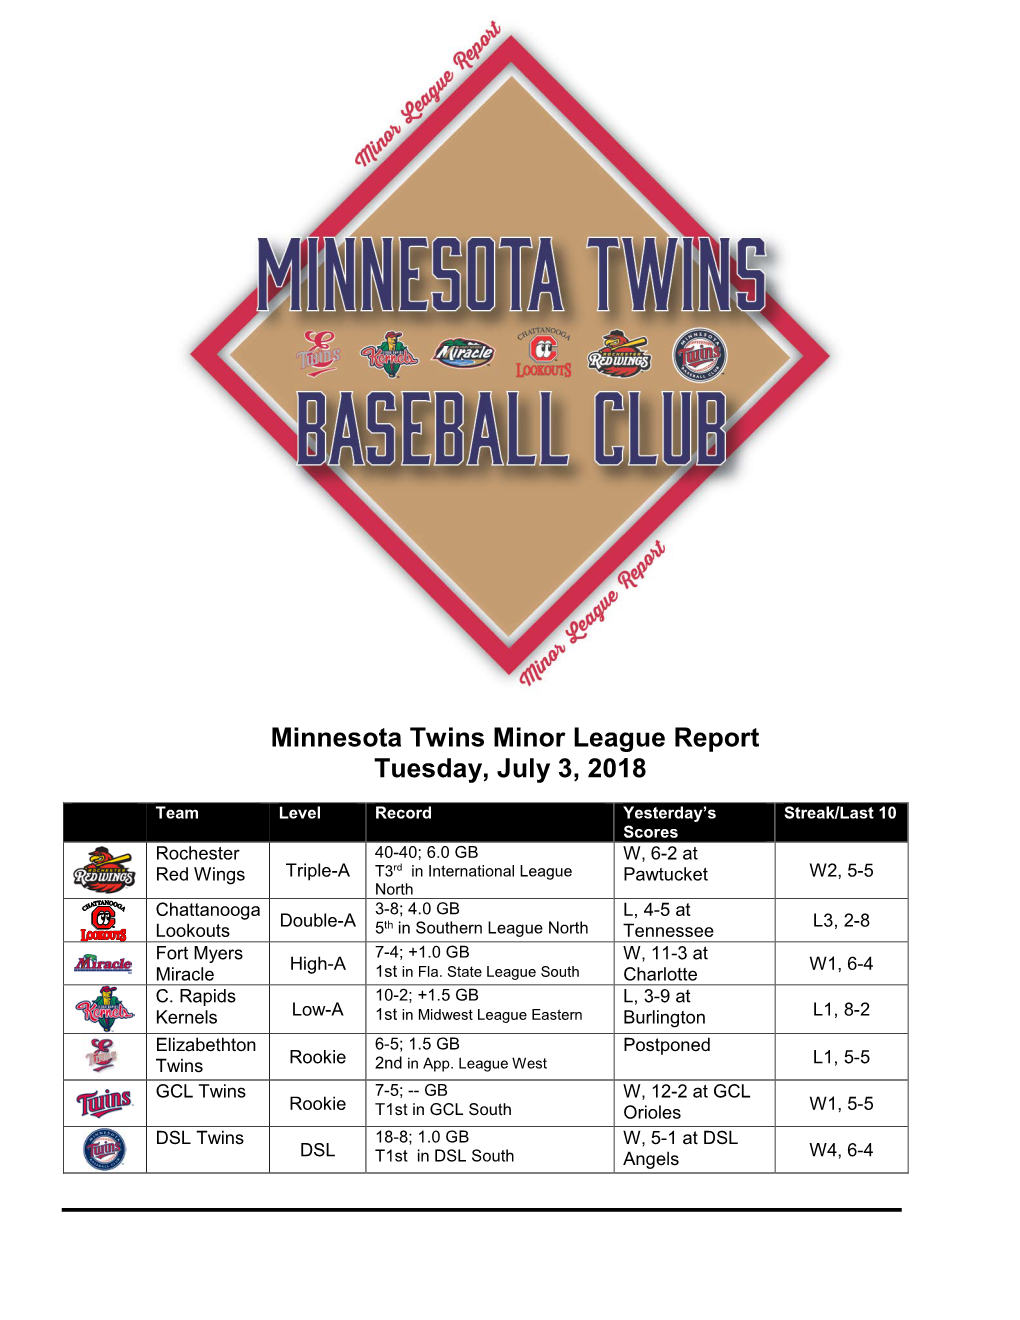 Minnesota Twins Minor League Report Tuesday, July 3, 2018